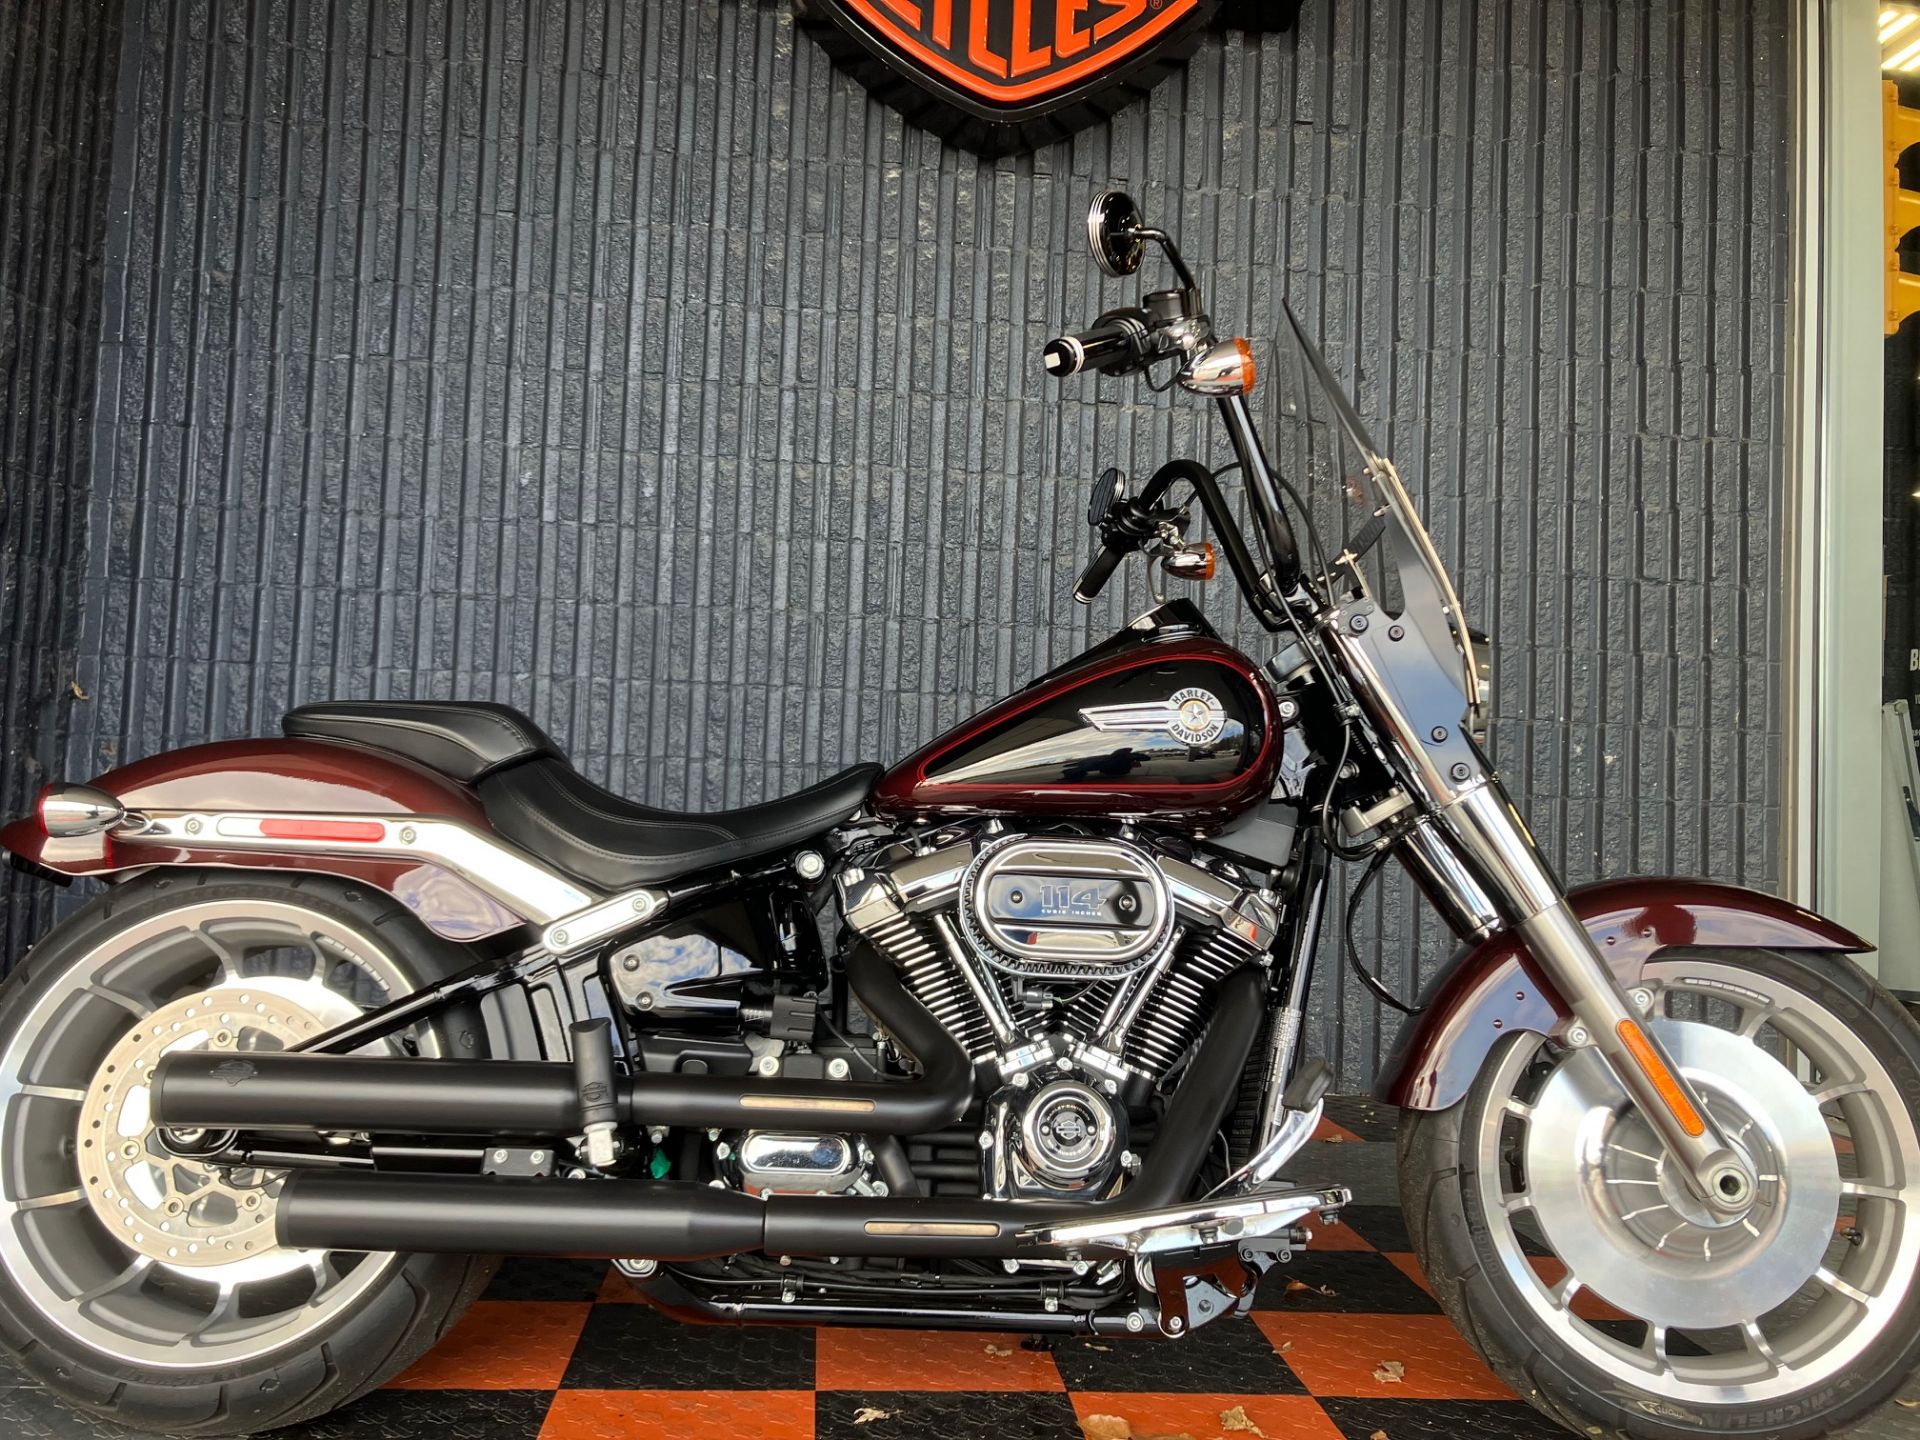 2022 Harley-Davidson FAT BOY in West Long Branch, New Jersey - Photo 1